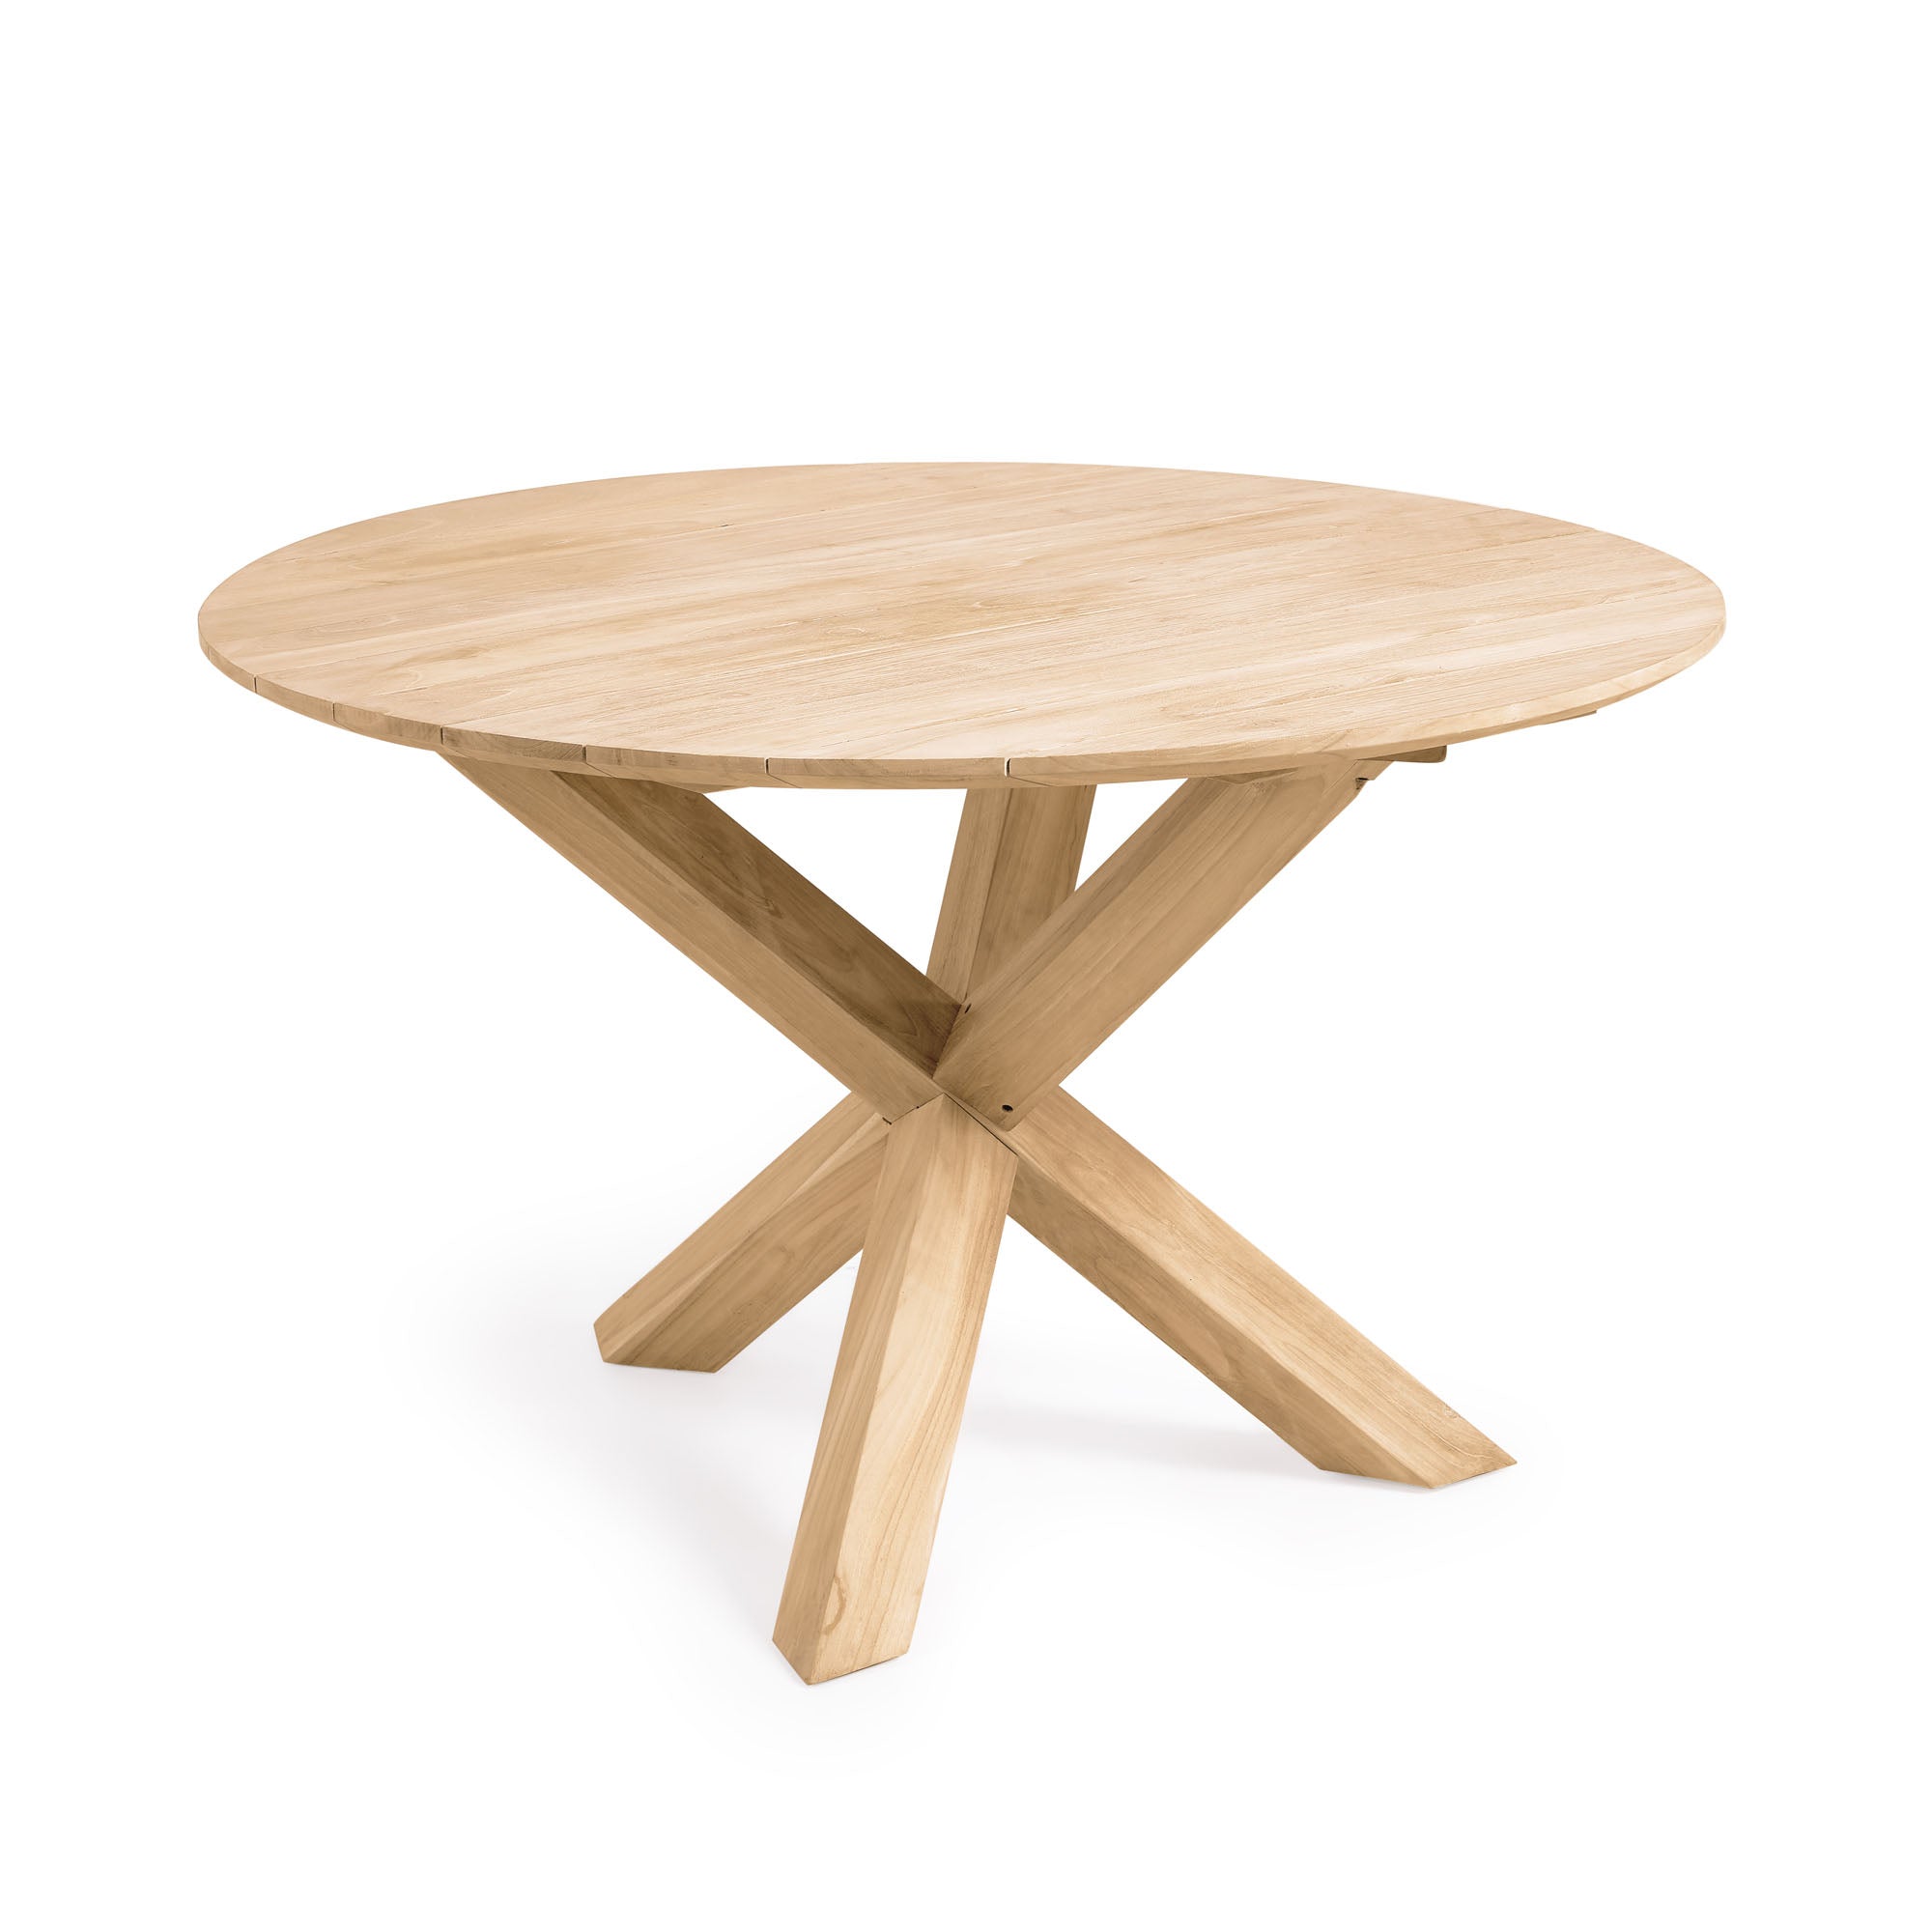 Teresinha round garden table in solid teak Ø 120 cm